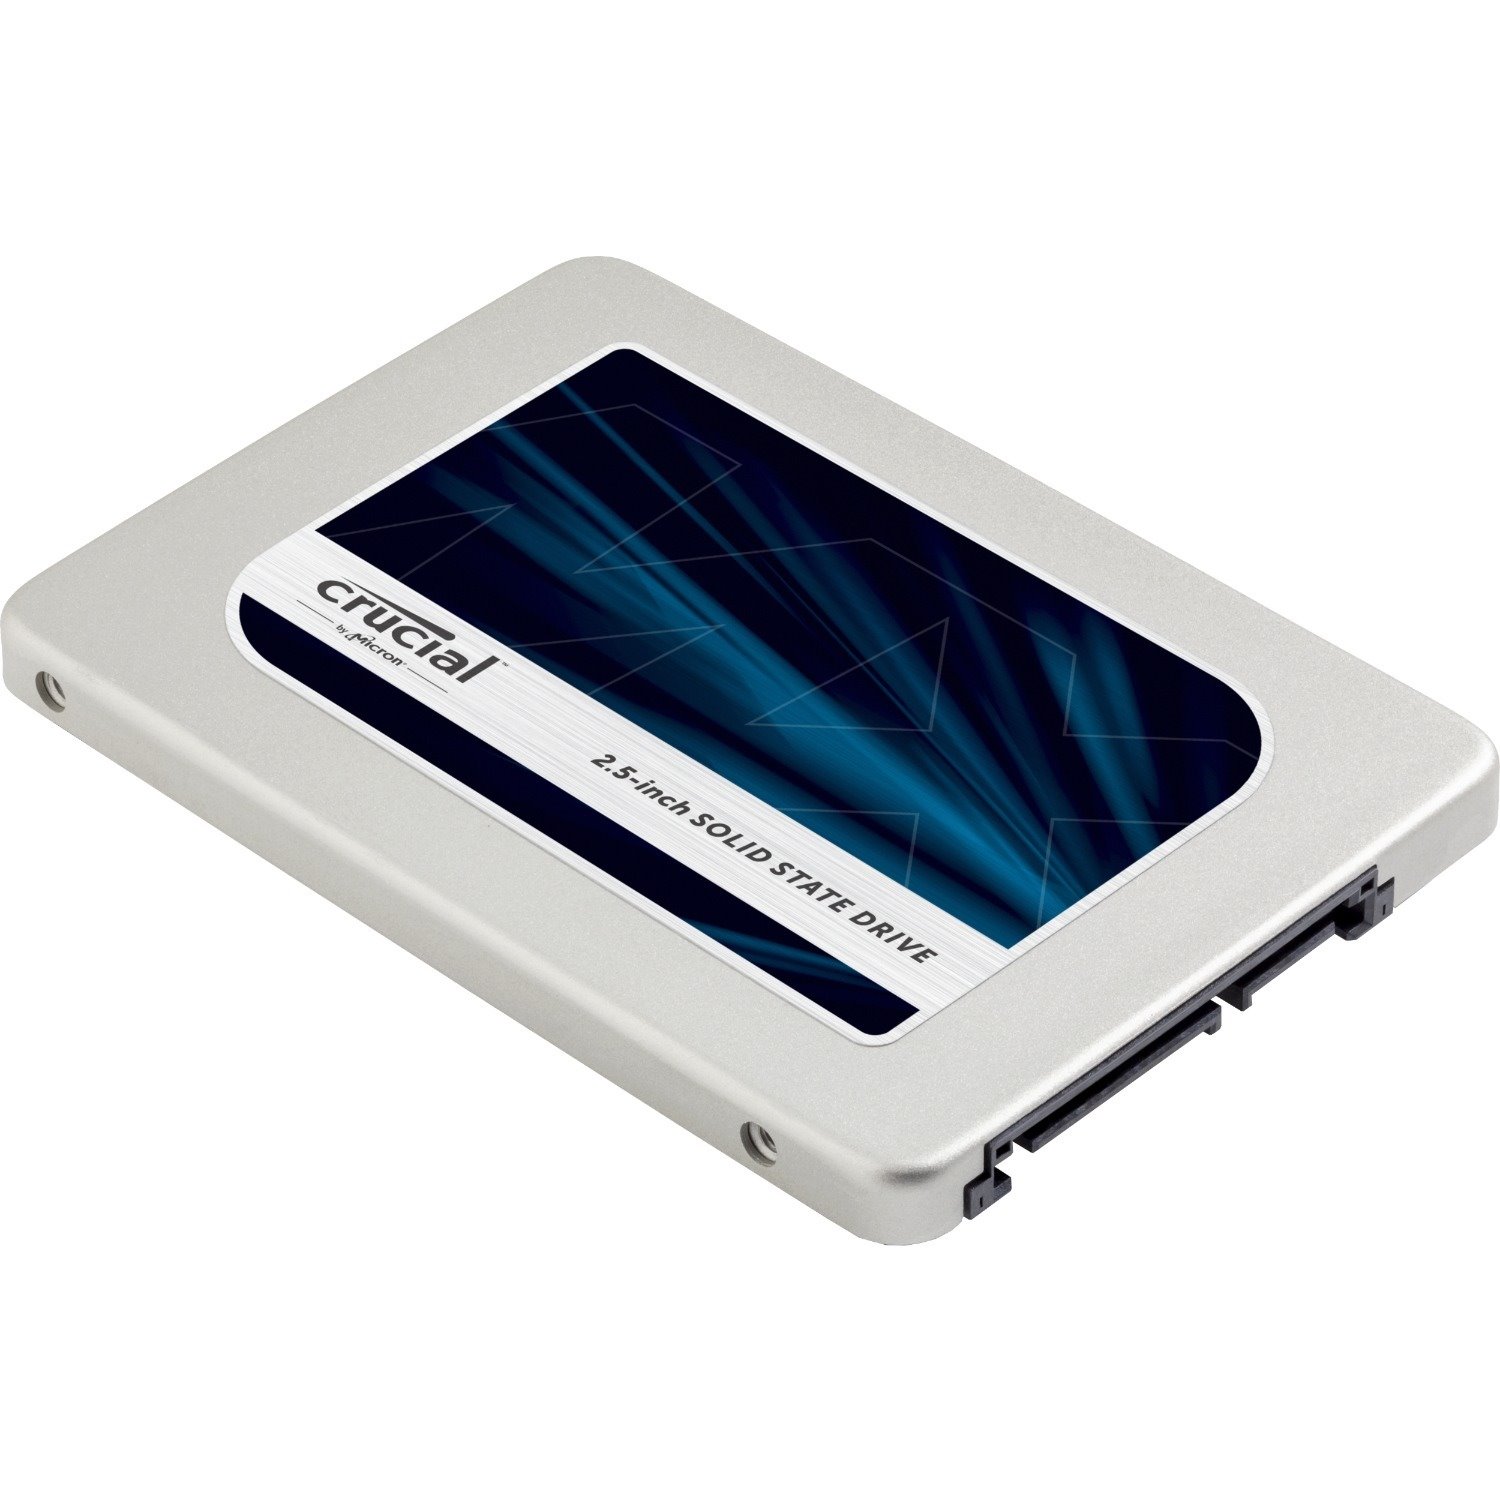 CRUCIAL/MICRON - IMSOURCING MX300 525 GB Solid State Drive - 2.5" Internal - SATA (SATA/600)